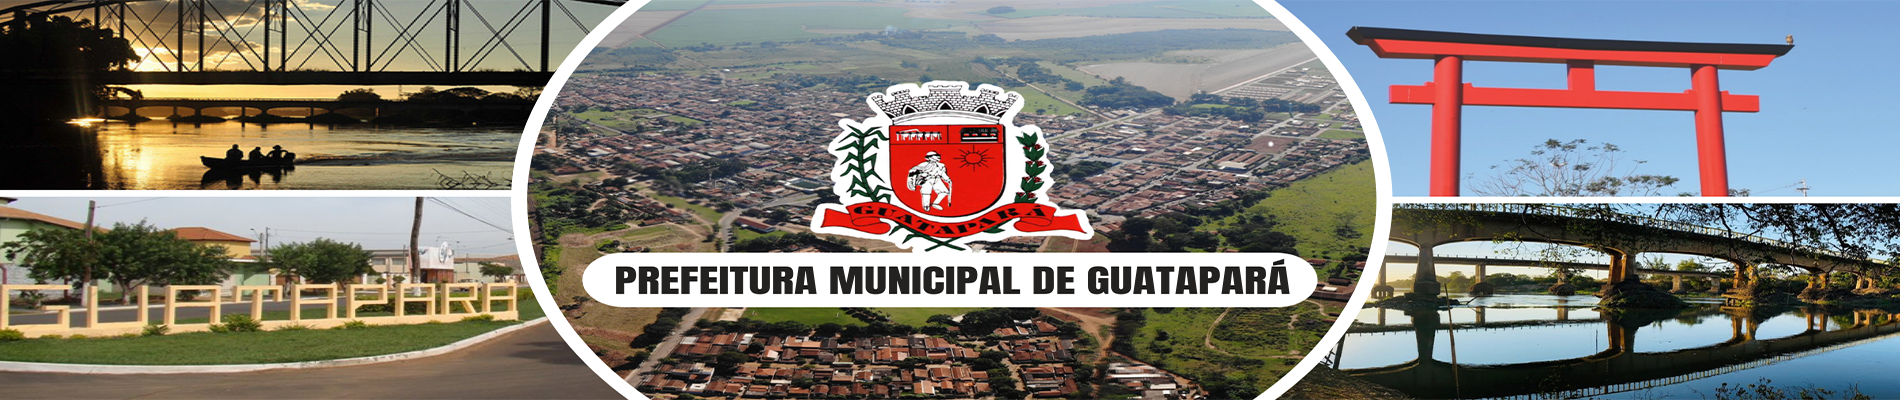 Prefeitura Municipal de Guatapará